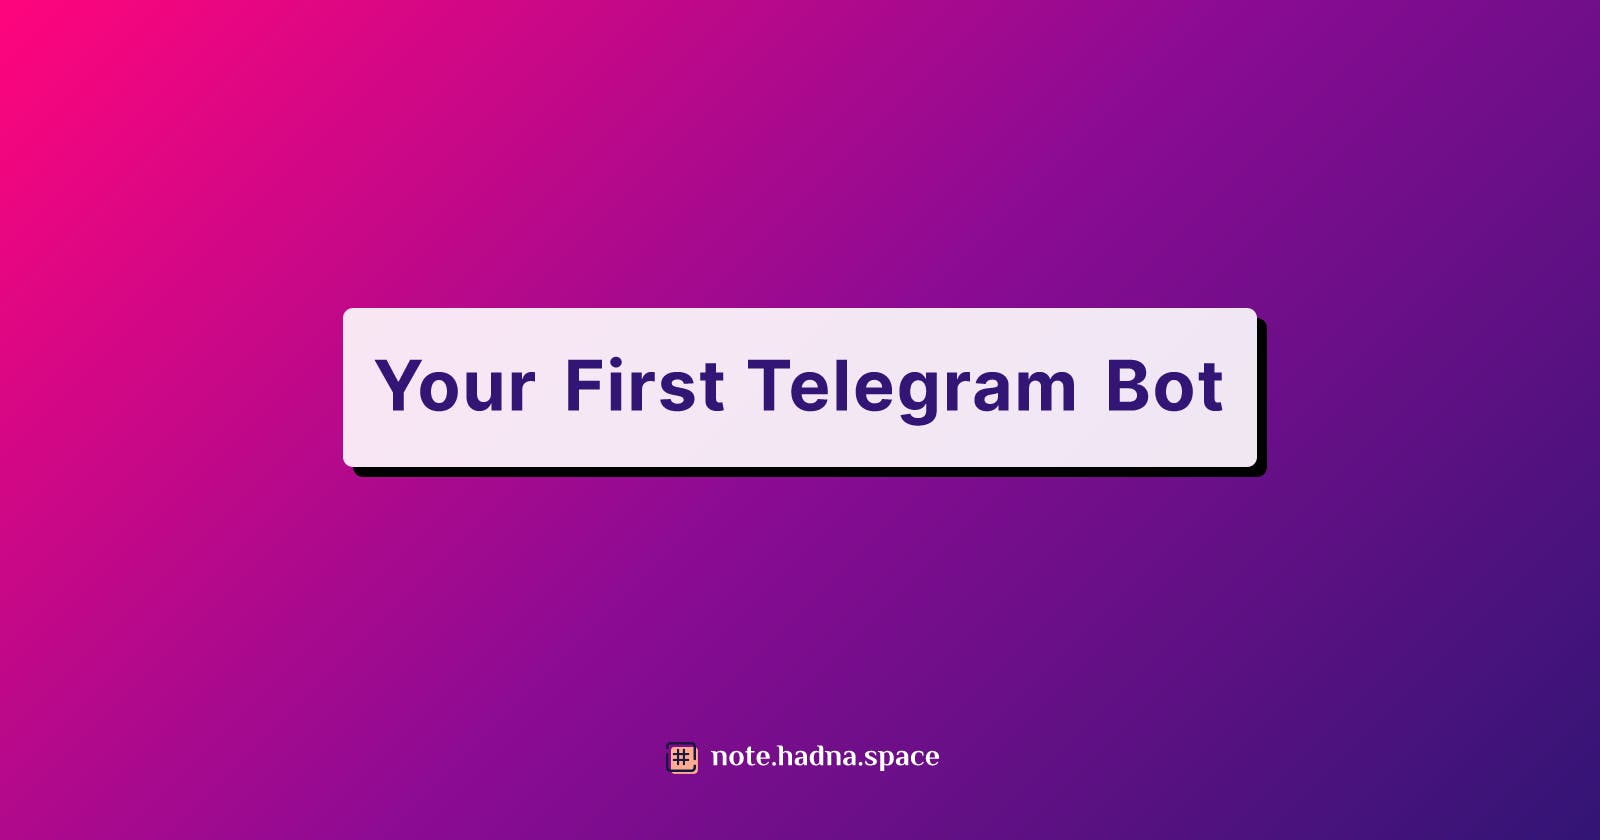 Your First Telegram Bot